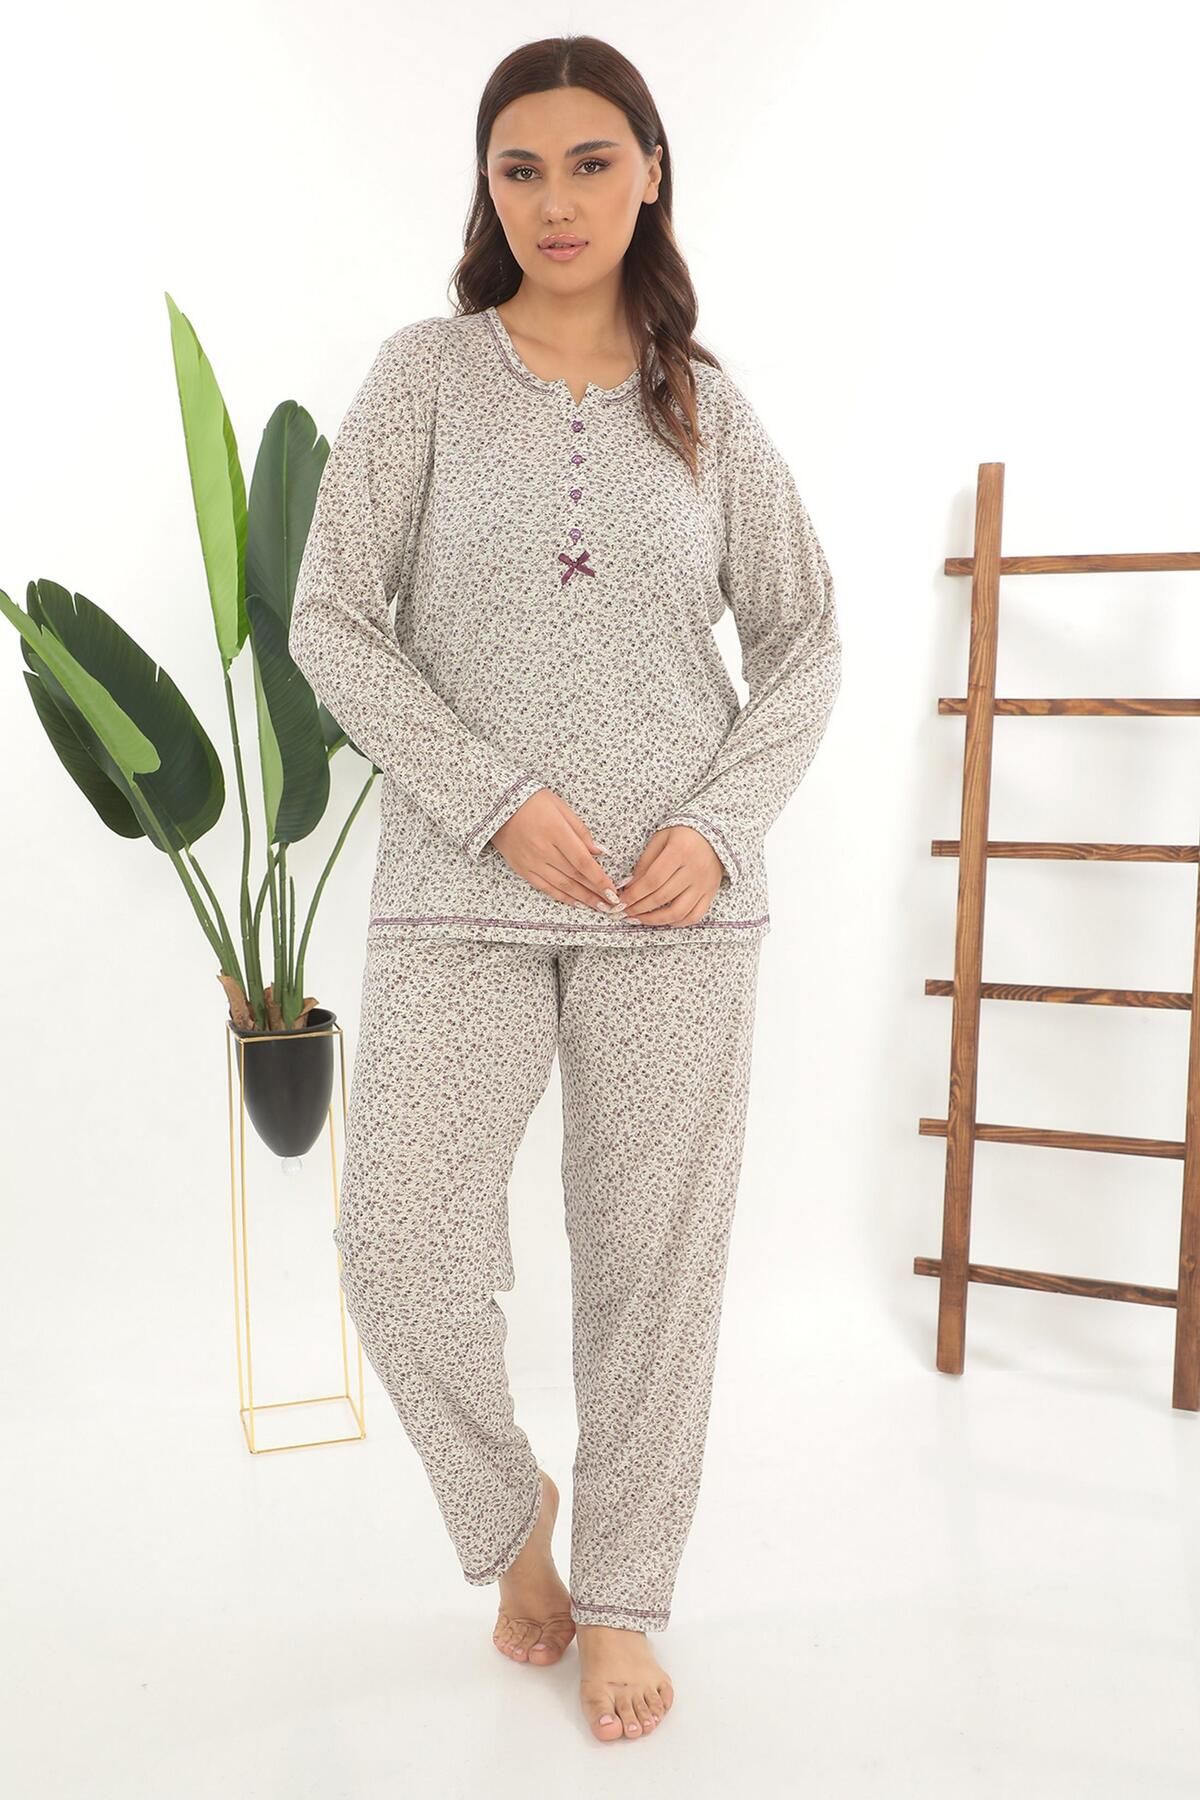 Etoile Pamuklu Kadın Pijama Takımı